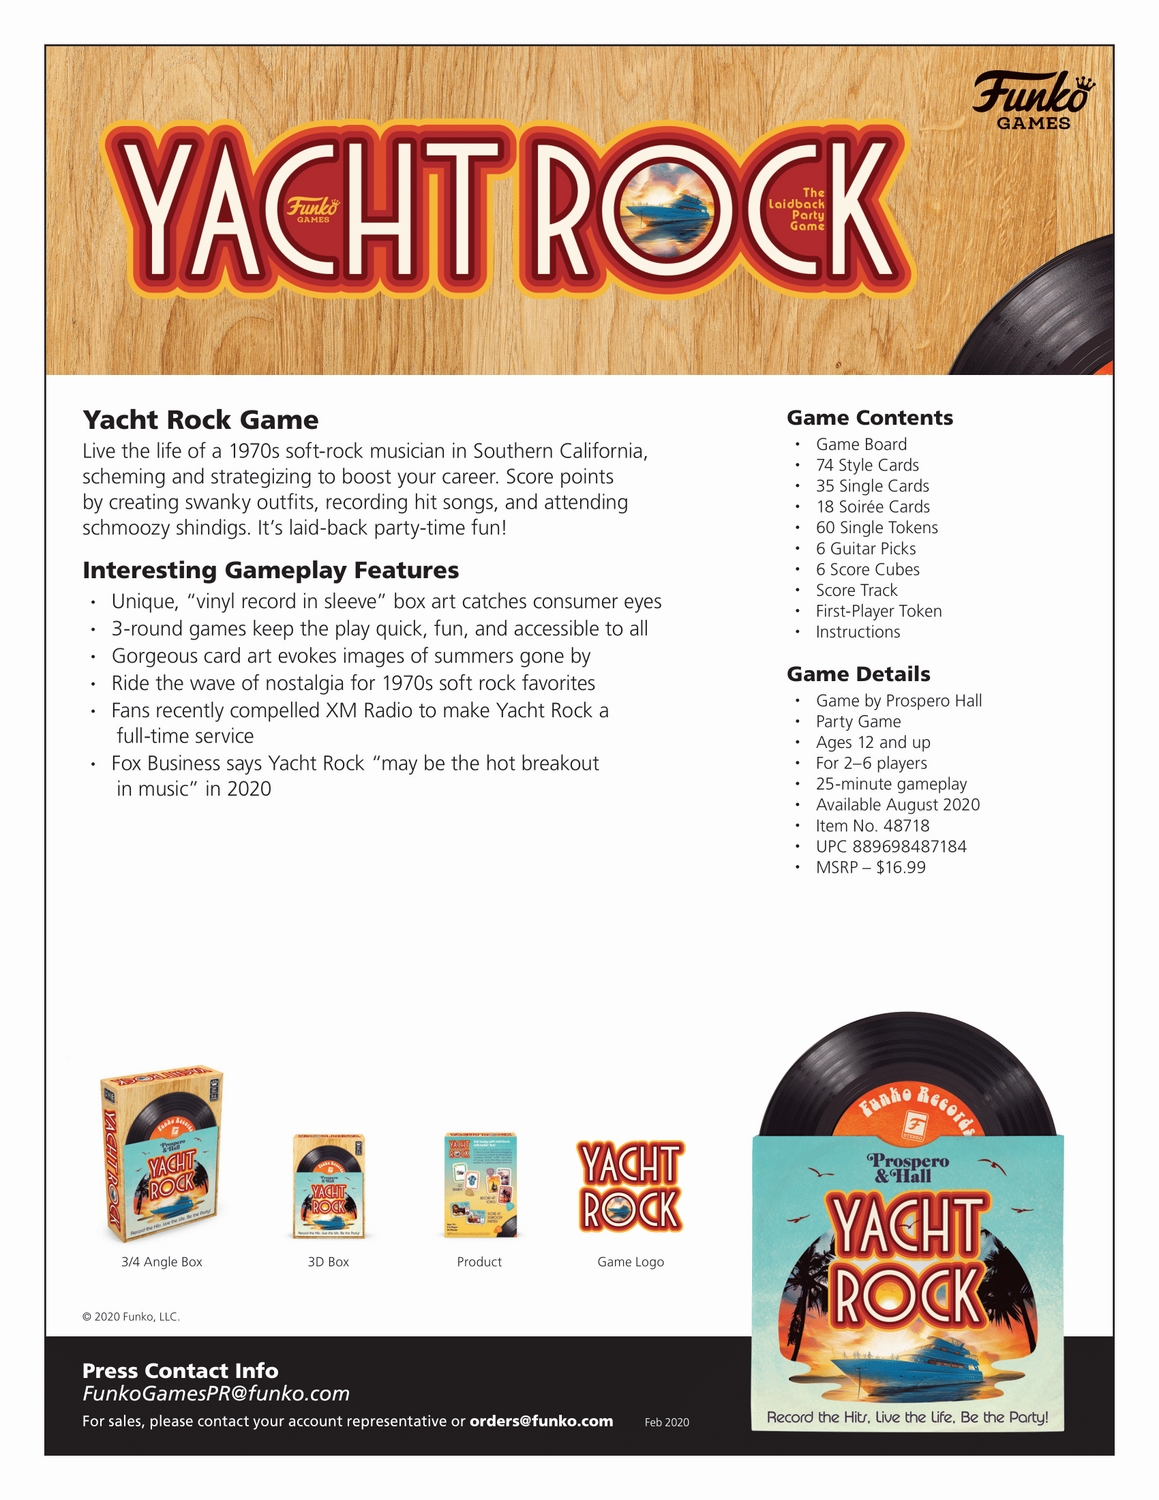 YachtRock_SalesSheets_NYTF-1.jpg